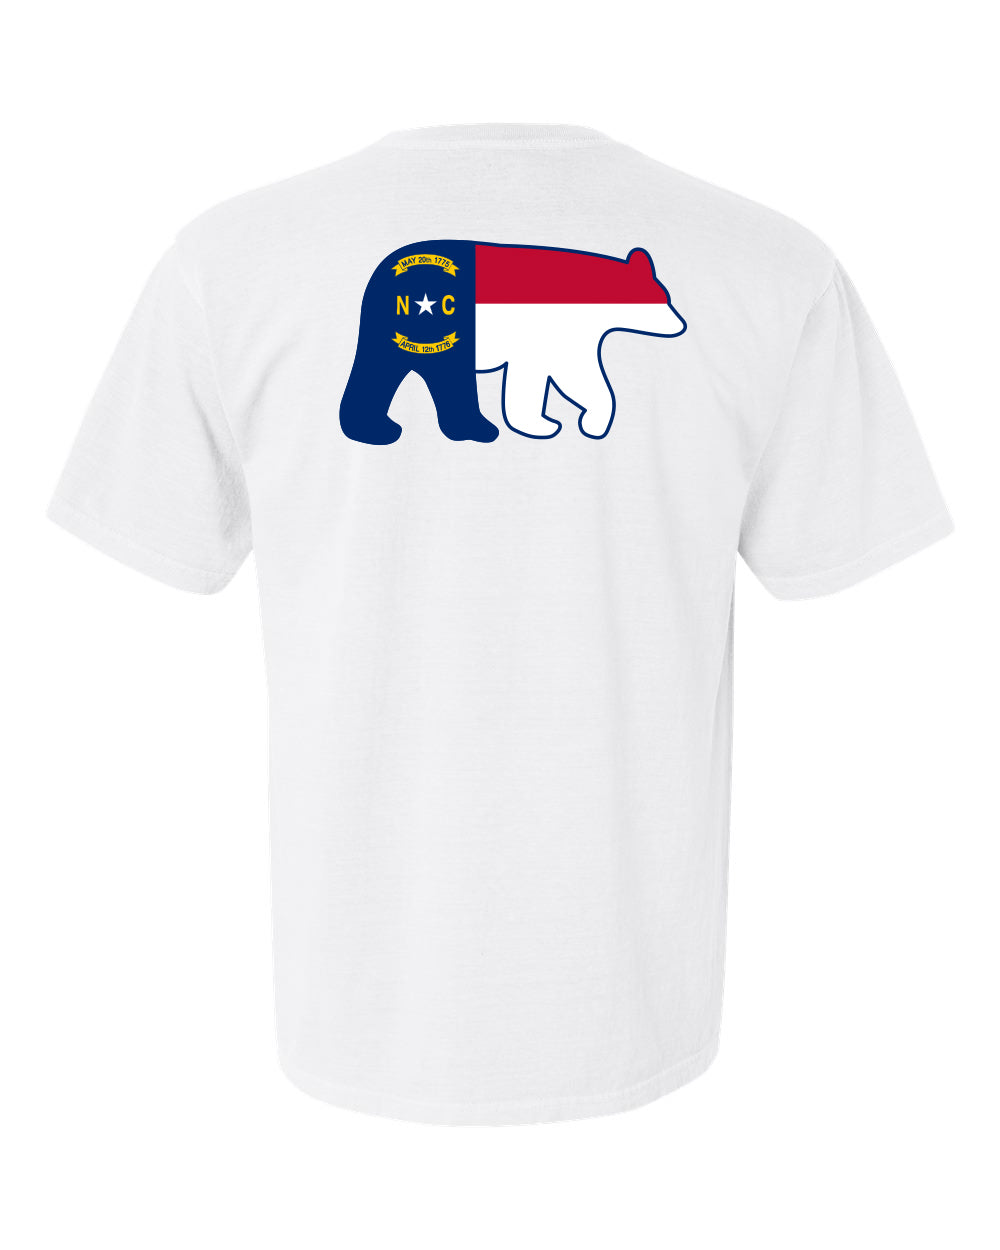 NC Flag Bear T-Shirt Classic White - The ASHEVILLE Co. TM